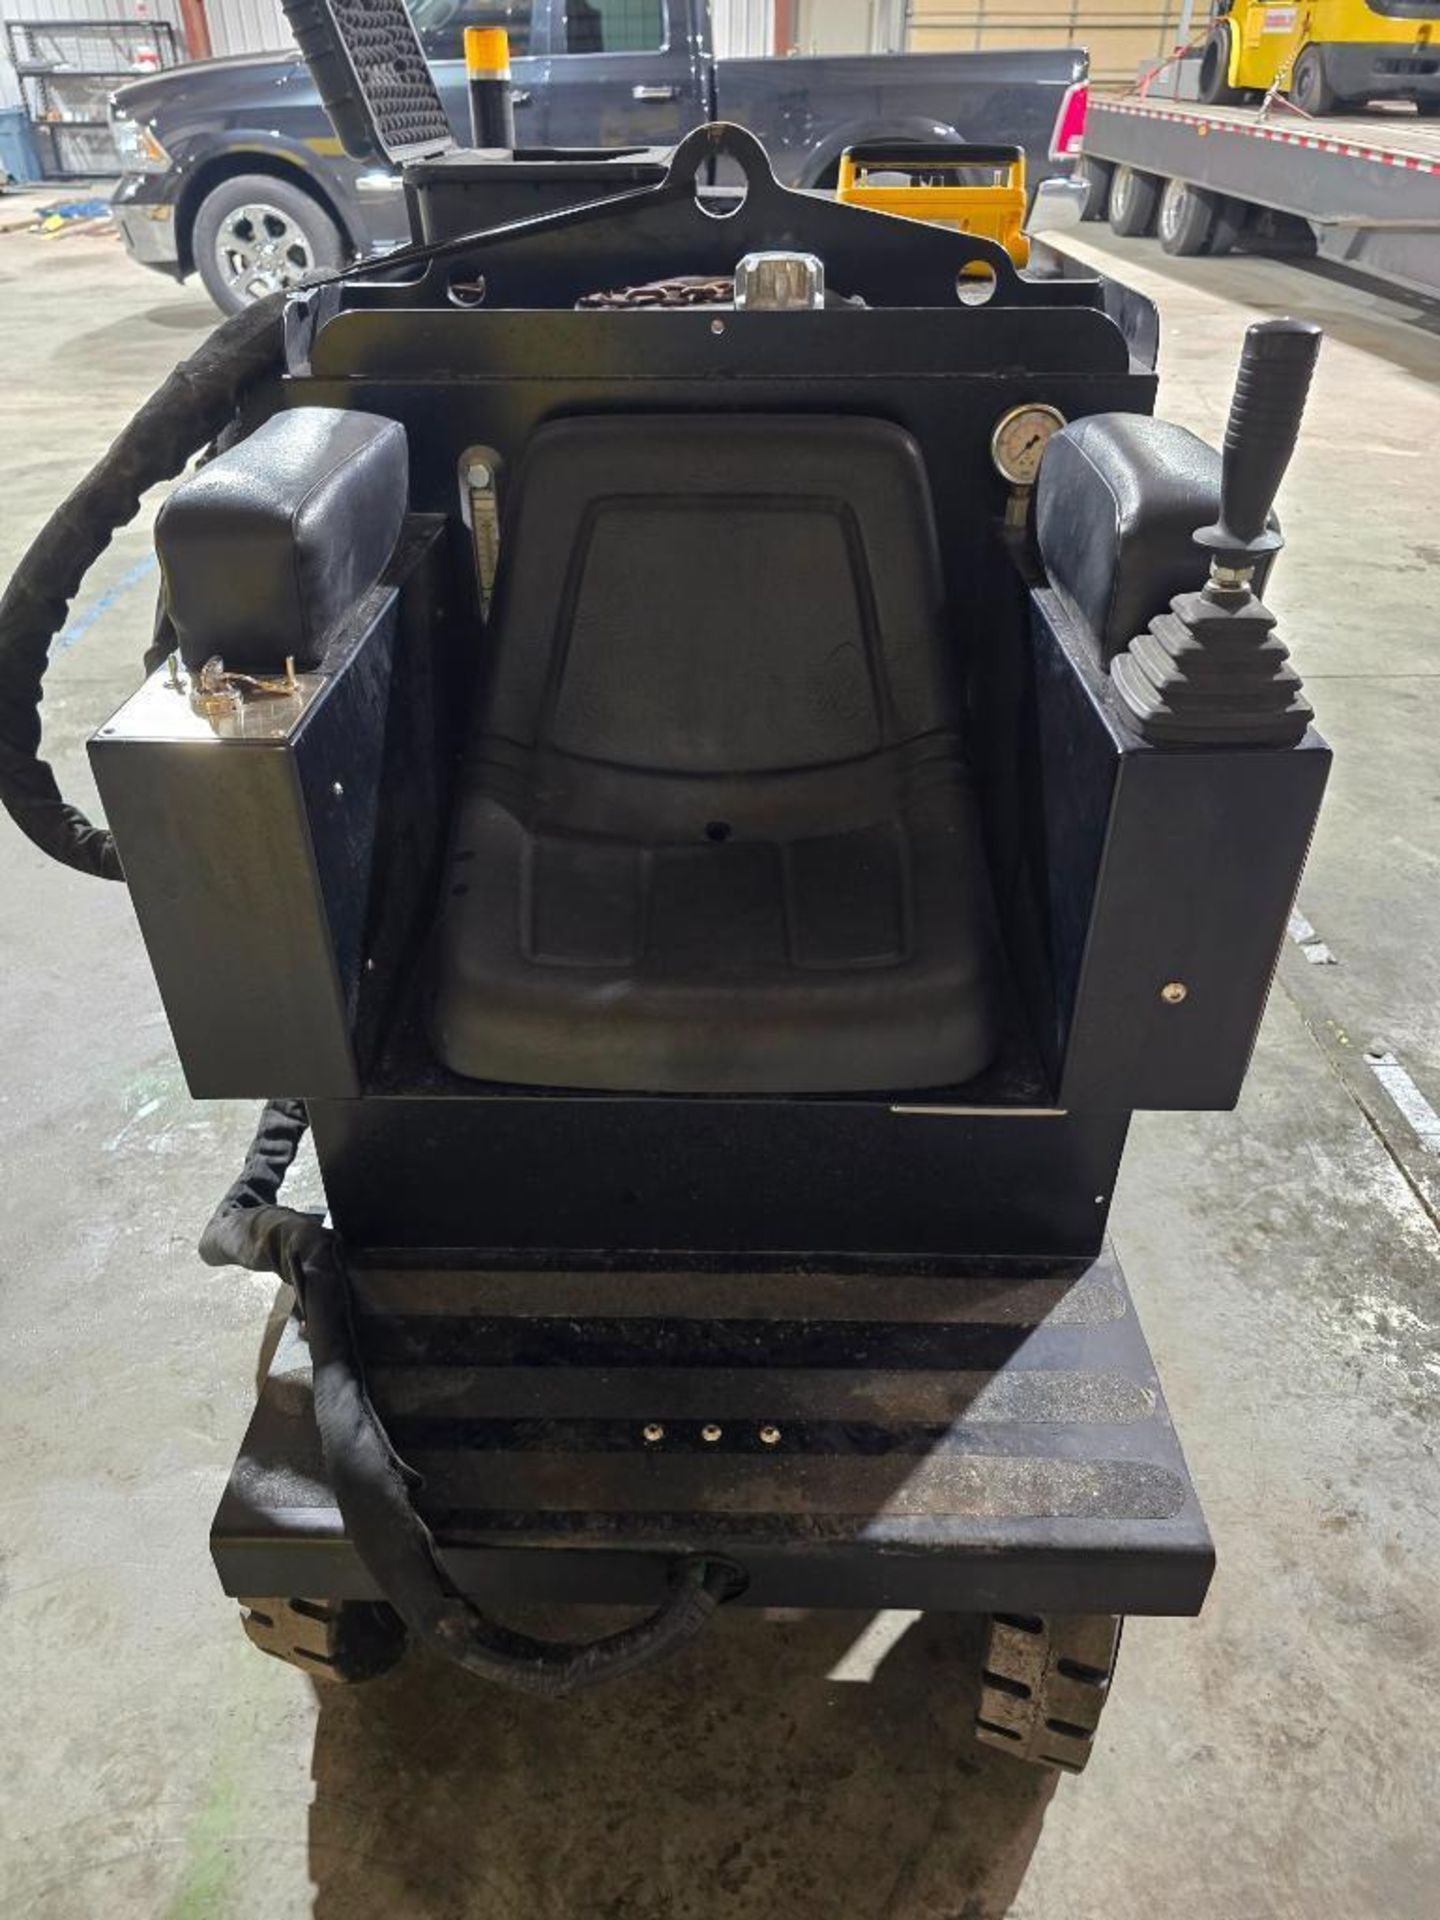 Hilman Traksporter Power Cart, LP, Remote Control Machine Skate, 60,000 LB. Capacity - Bild 5 aus 10